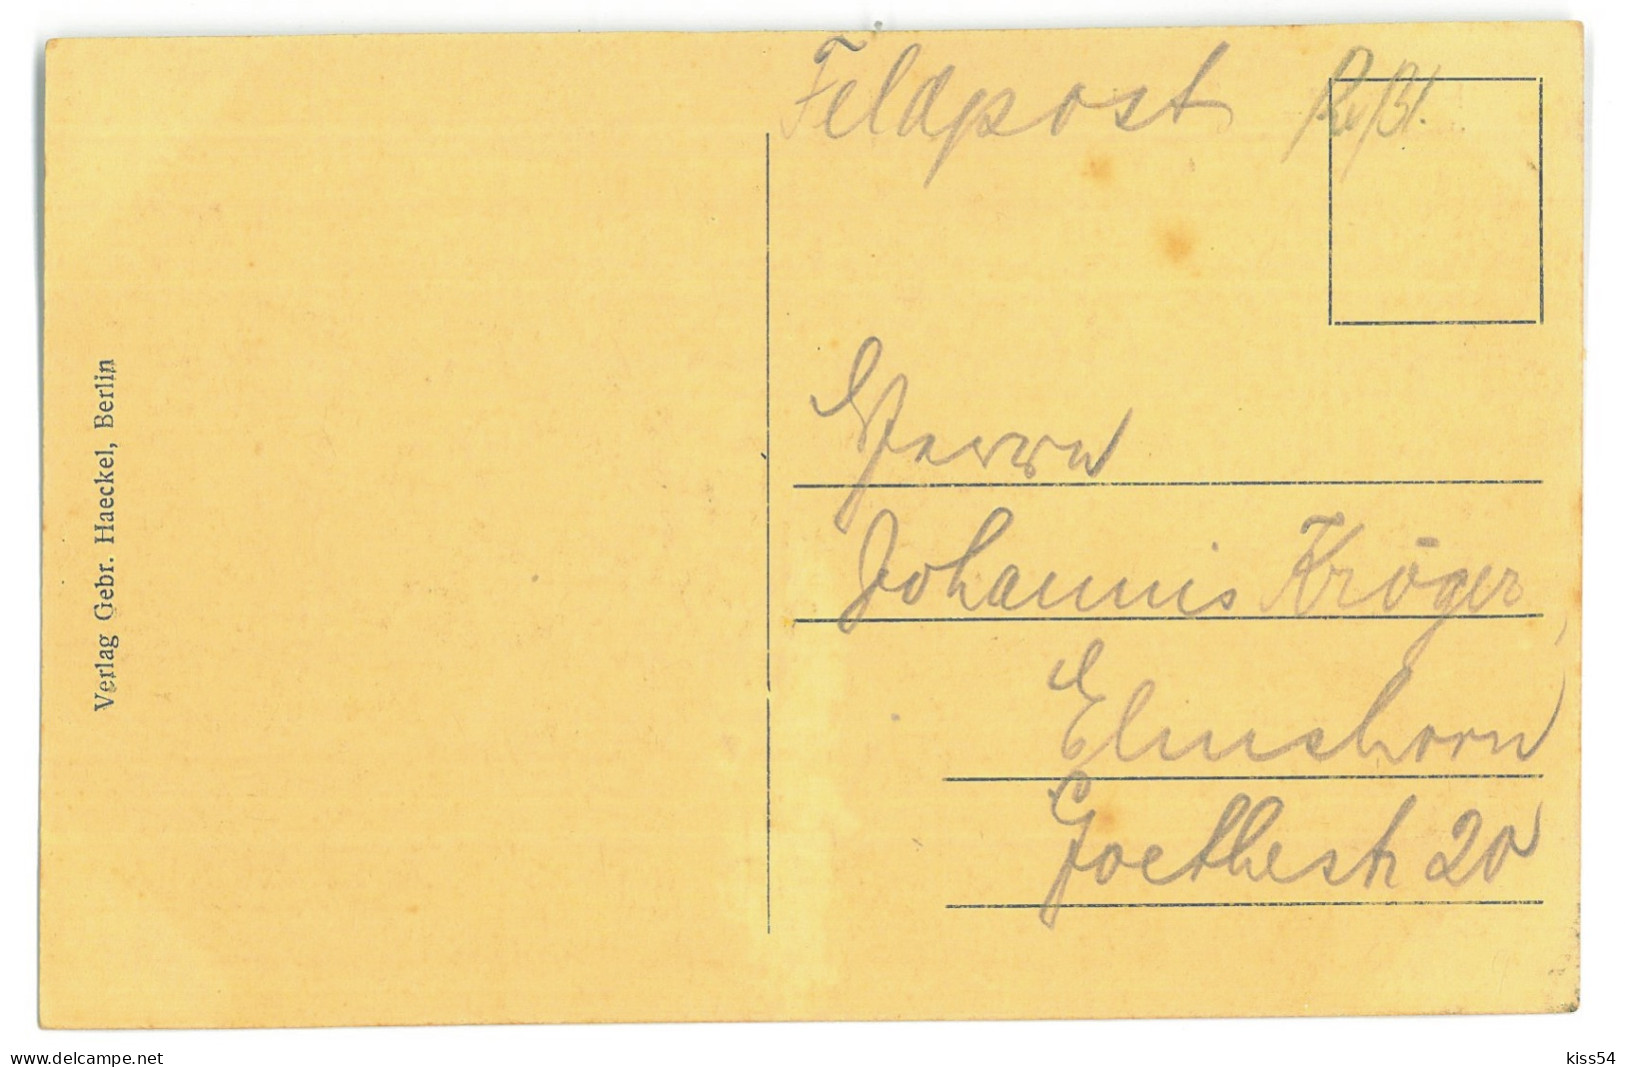 BL 12 - 23584 LIDA, Russian Barracks, Belarus - Old Postcard - Used - 1912 - Belarus